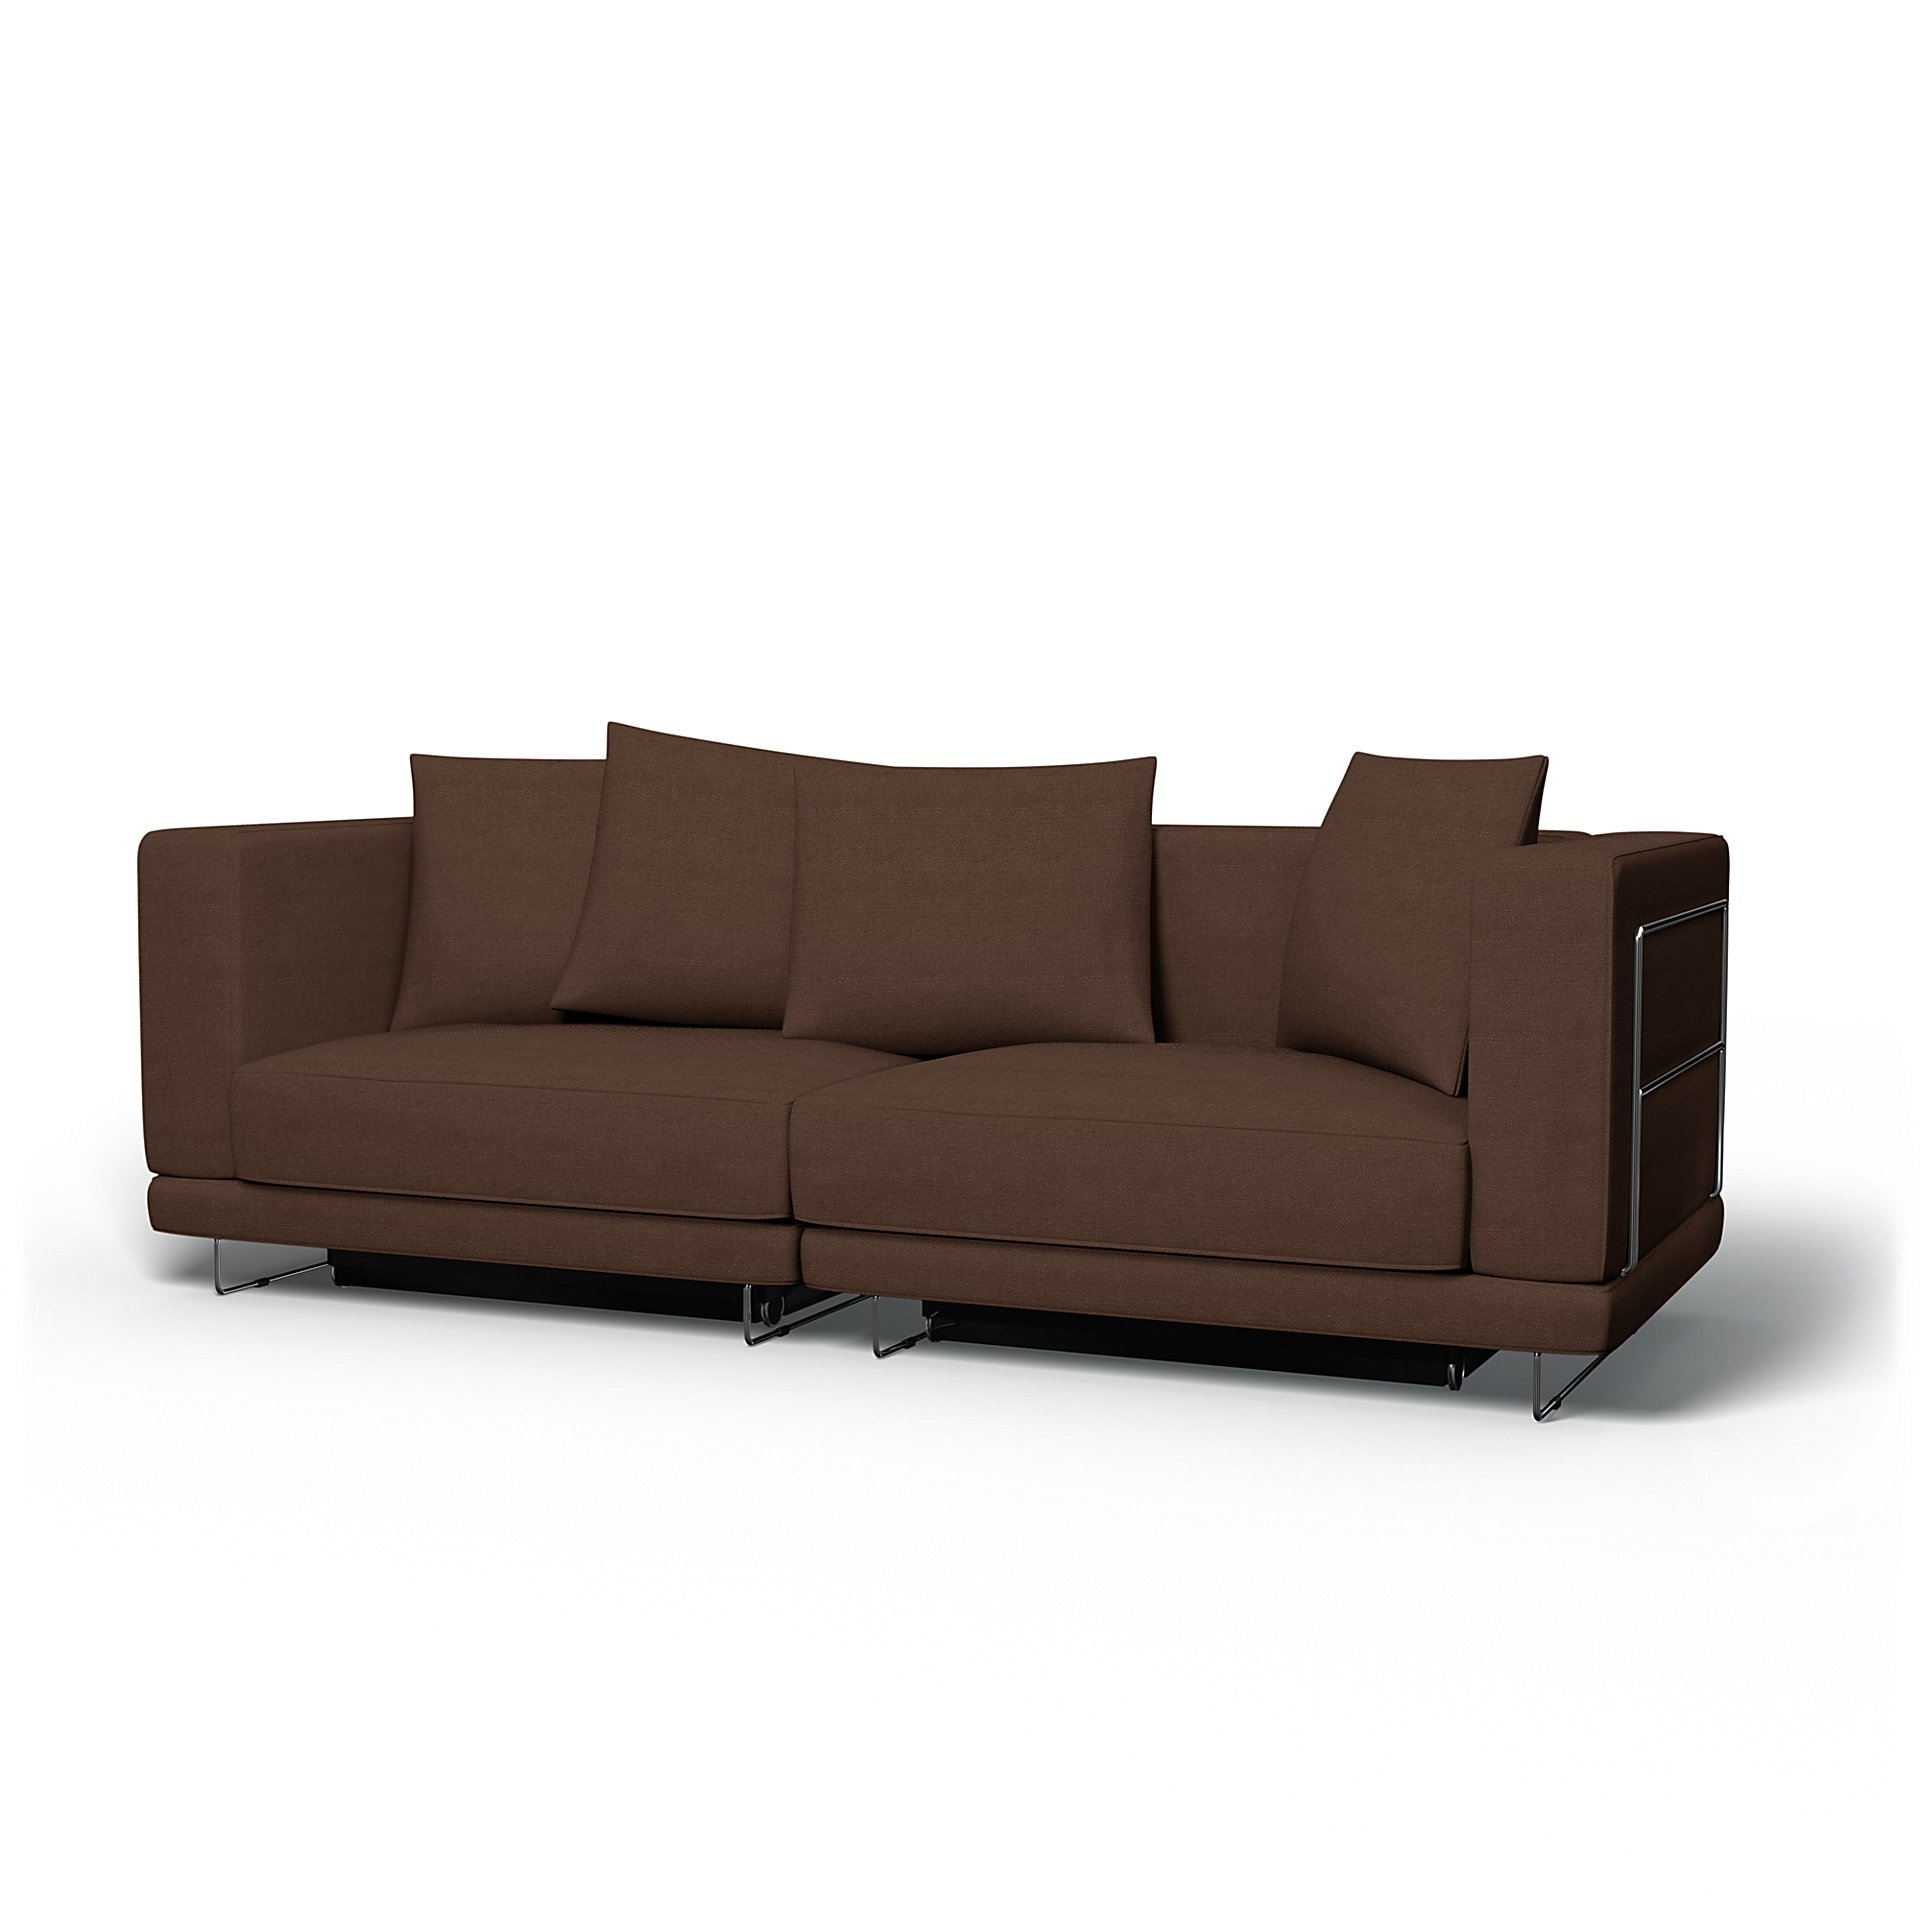 IKEA - Tylosand Sofa Bed Cover, Chocolate, Linen - Bemz